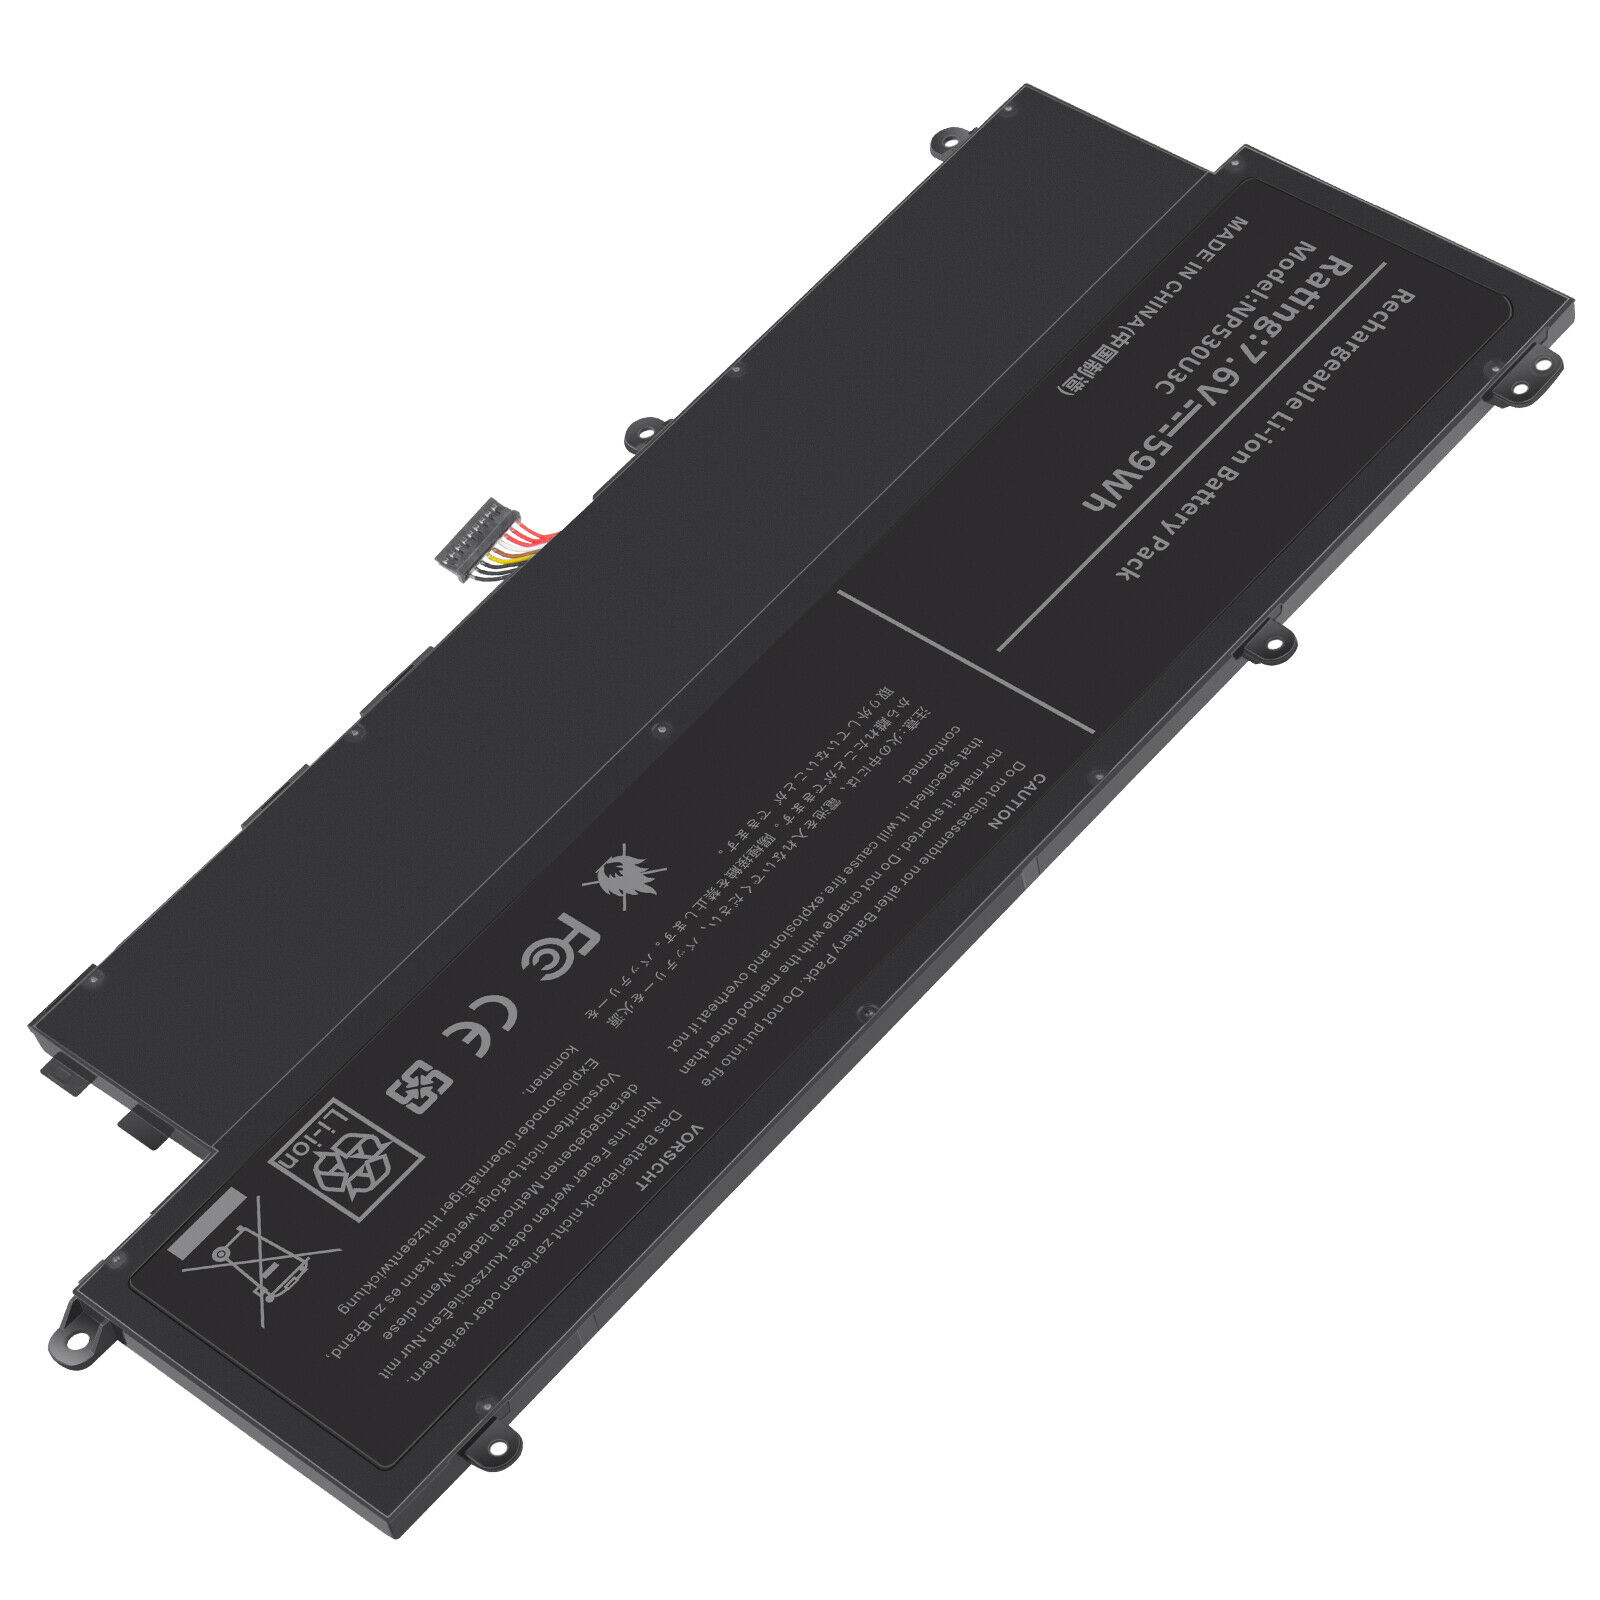 Samsung NP535U3C-A03CN Replacement Battery 1